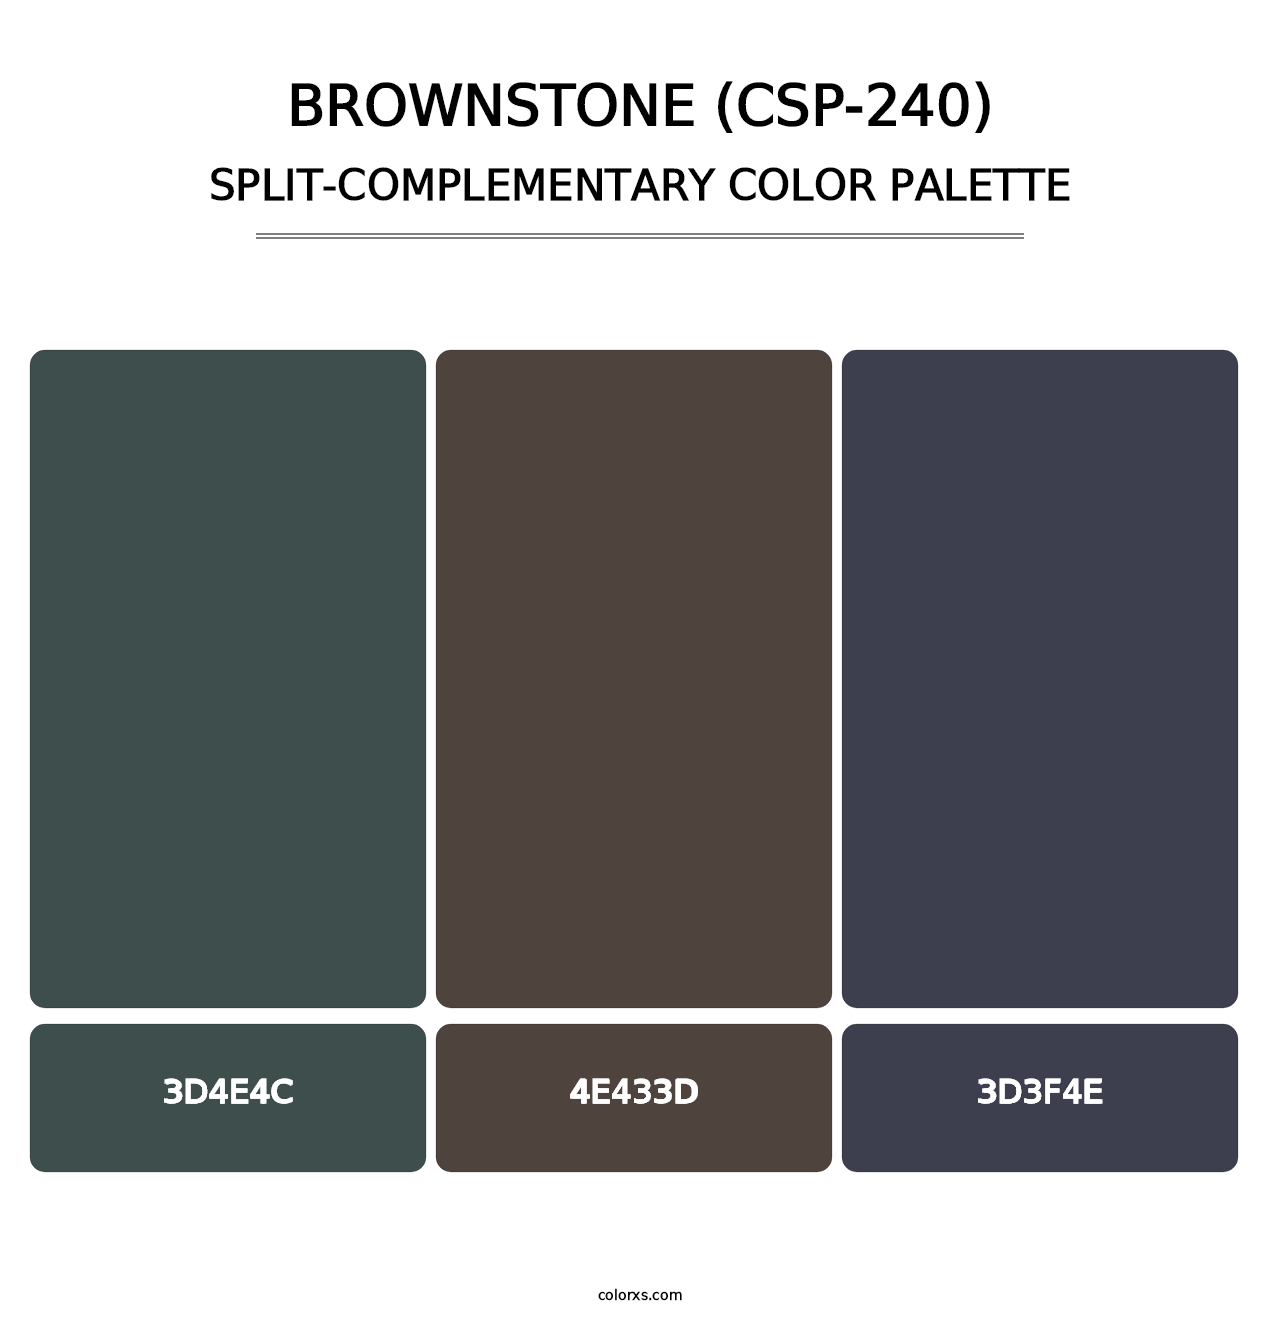 Brownstone (CSP-240) - Split-Complementary Color Palette